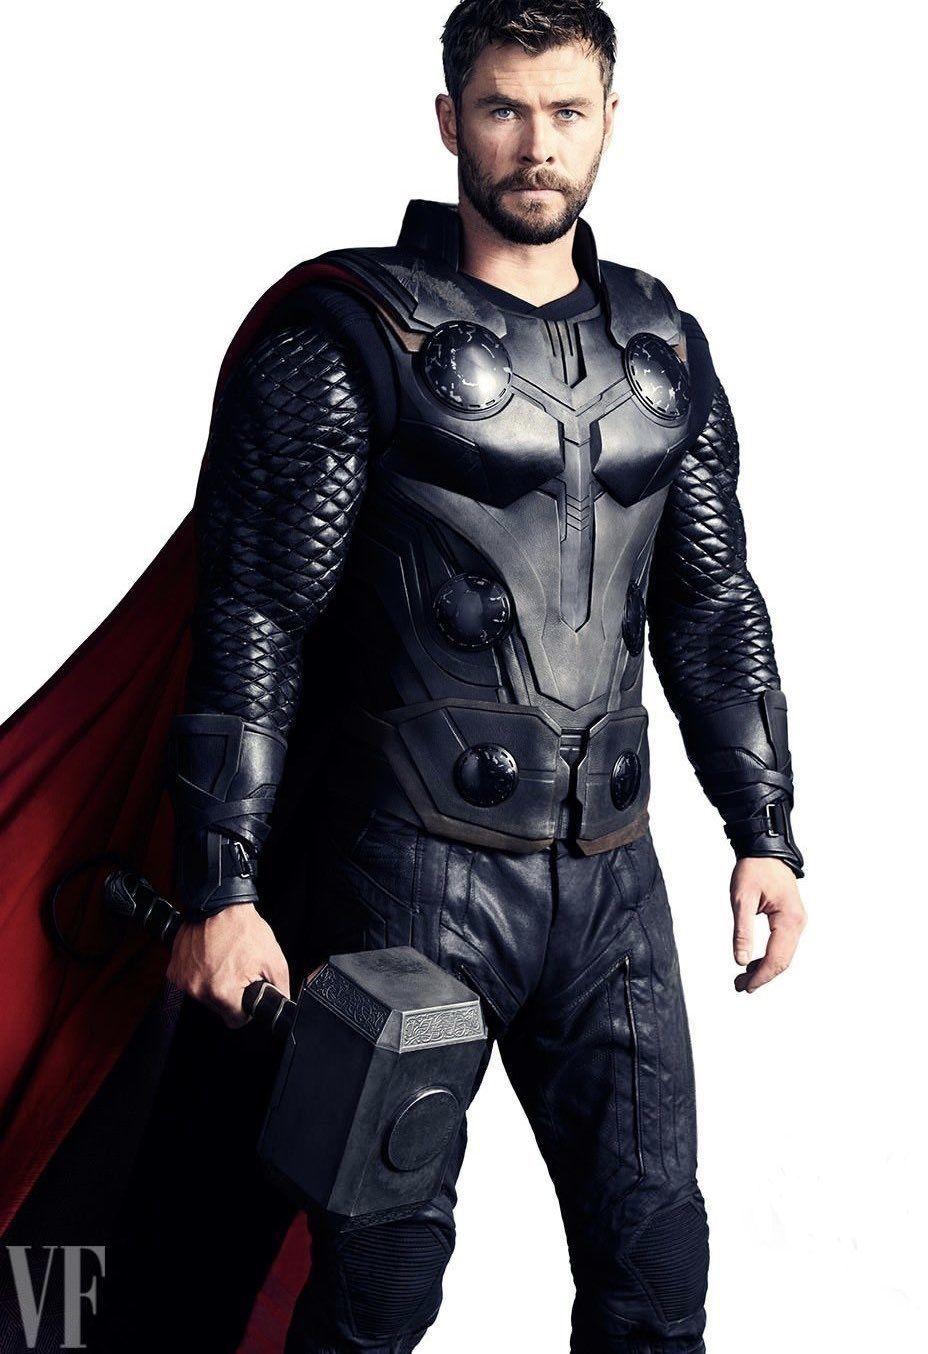 Chris Hemsworth as Thor in Avengers Infinity War. Chris